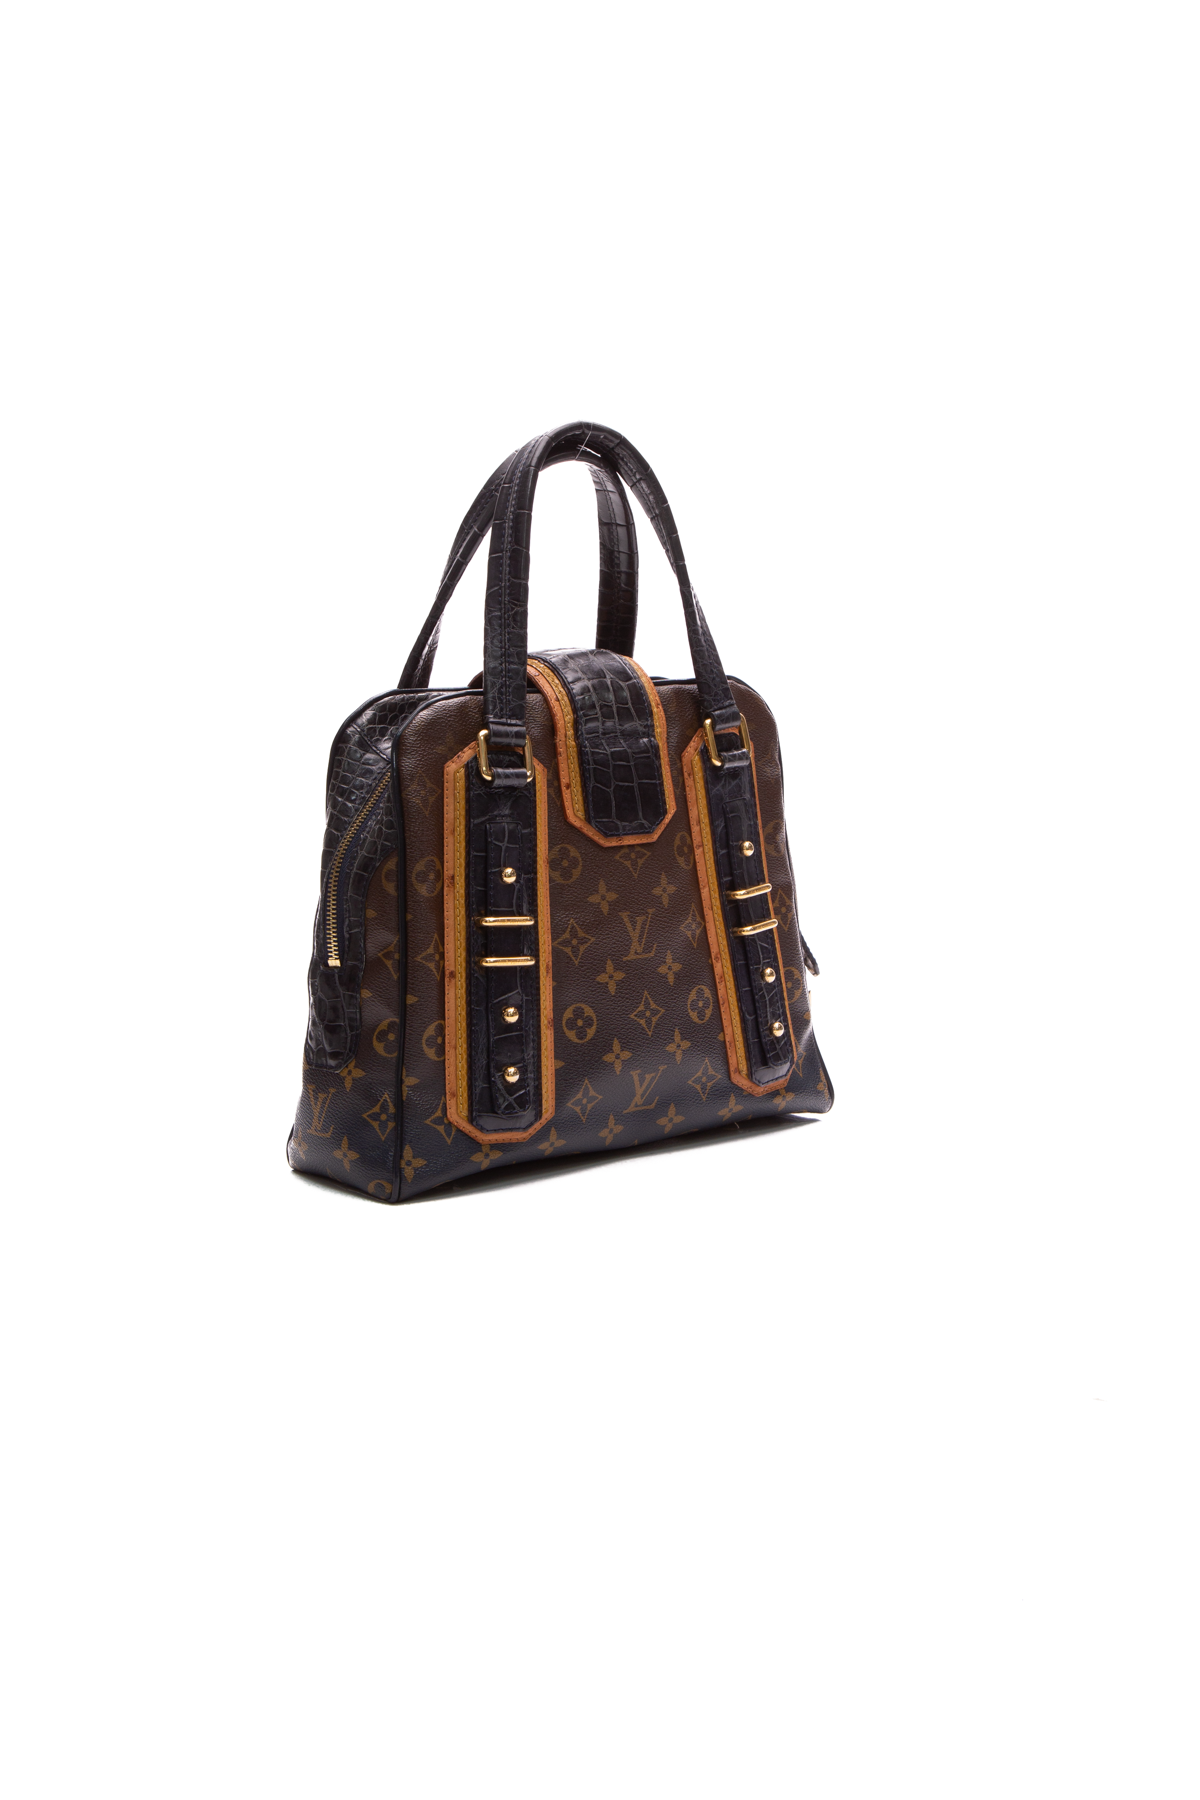 Louis Vuitton Delft Handbag Limited Edition Monogram Mirage and Exotics